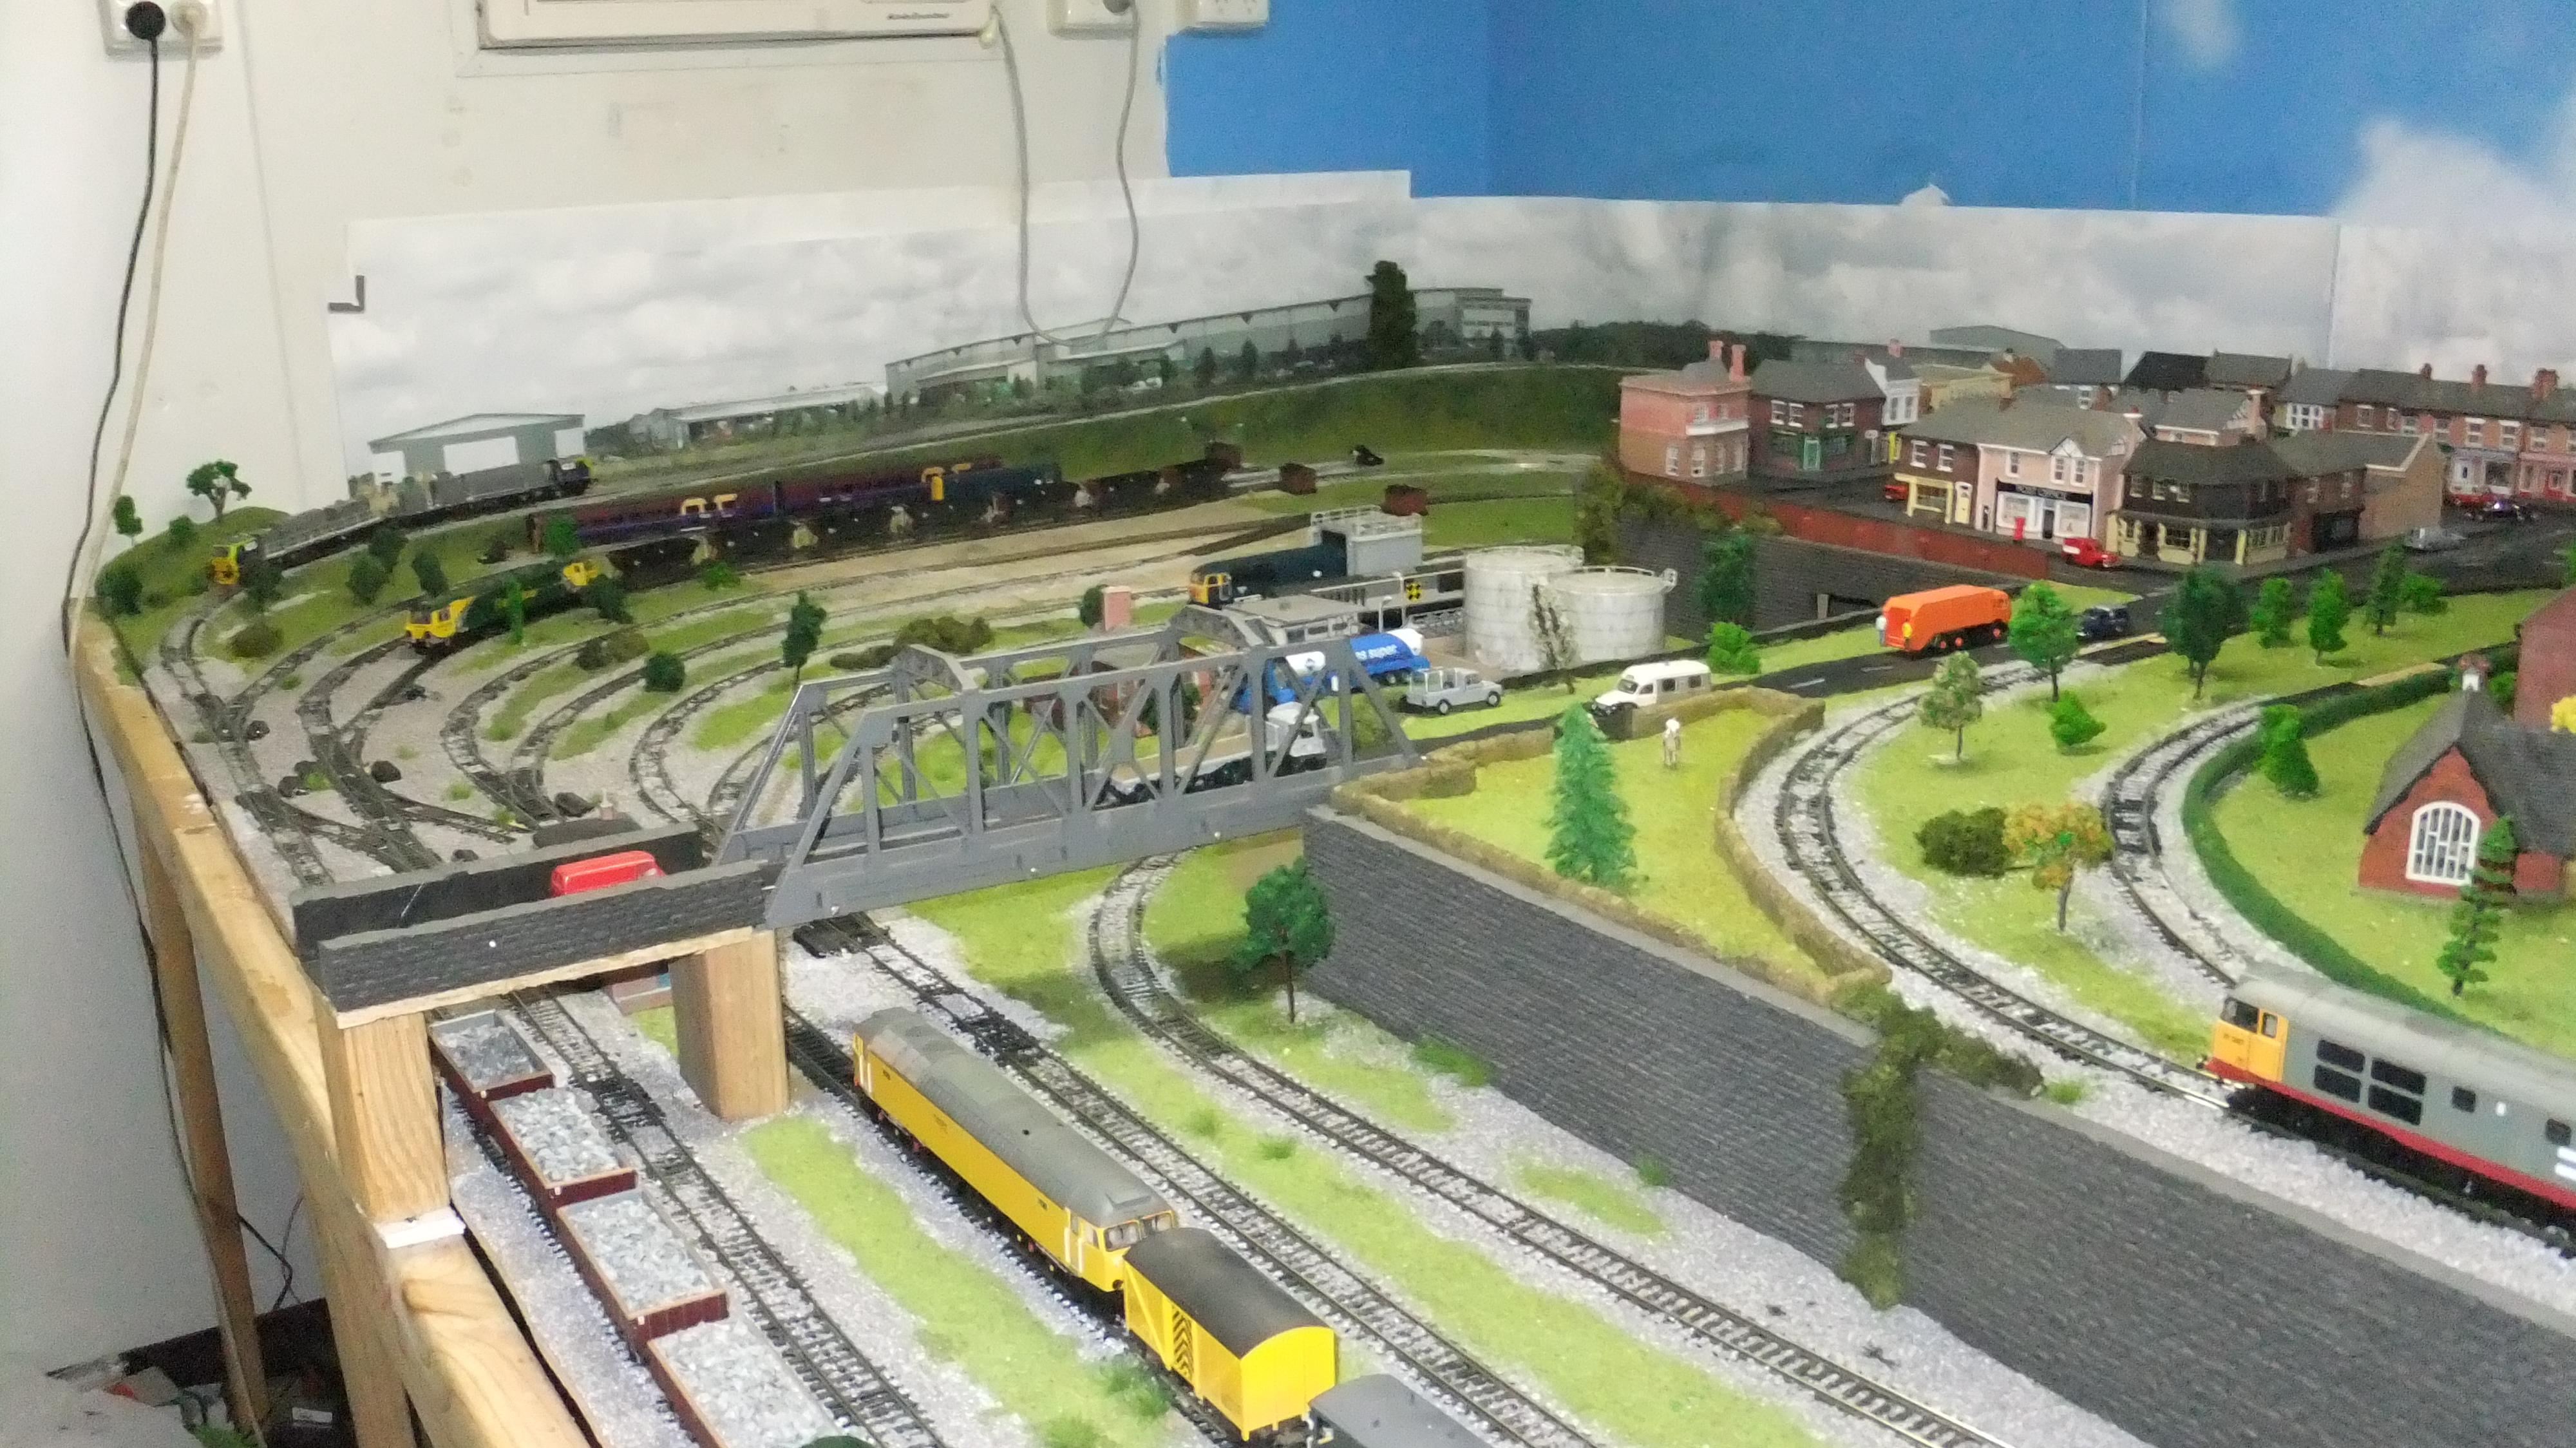 Tom’s layout | Model railway layouts plans